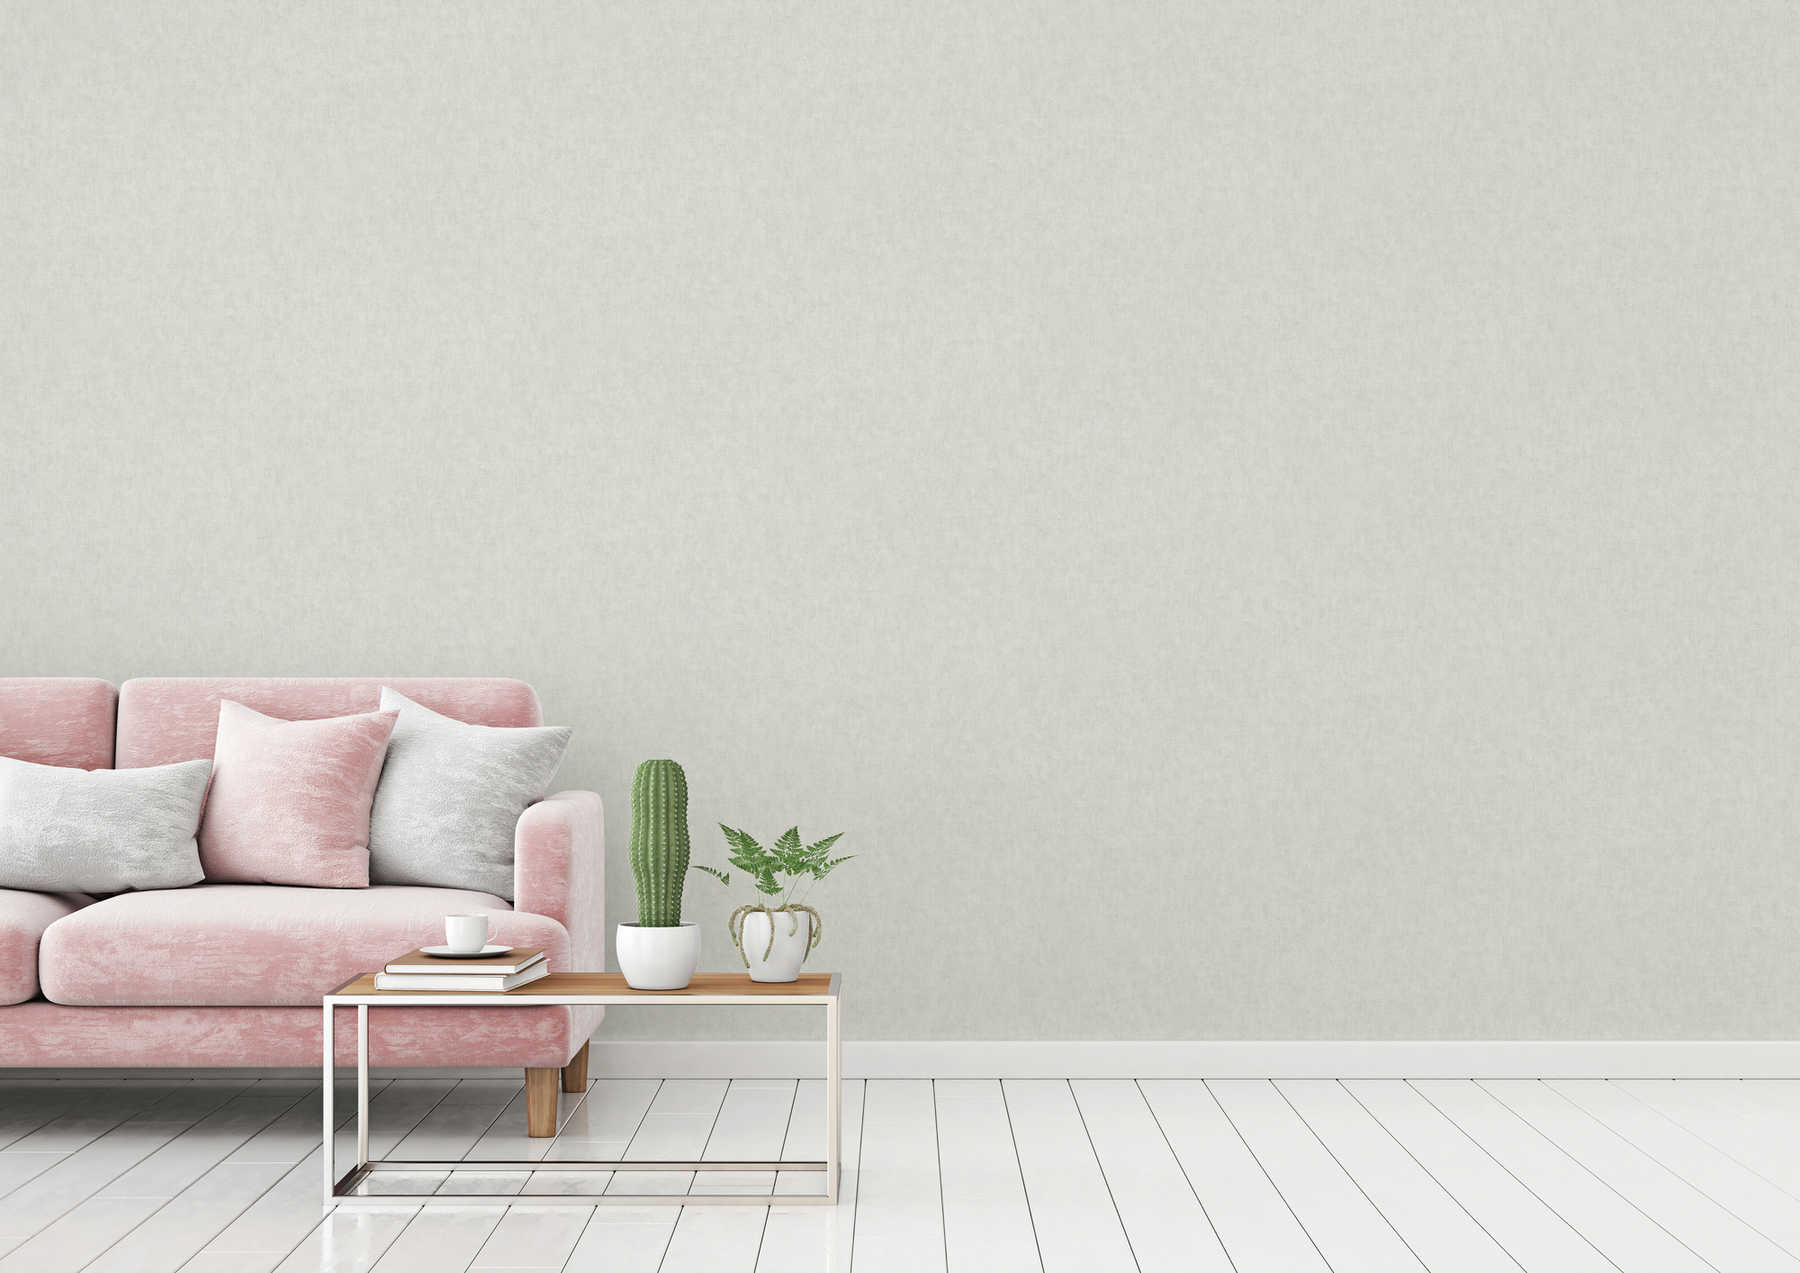             Scandinavian style plain wallpaper with linen look - grey
        